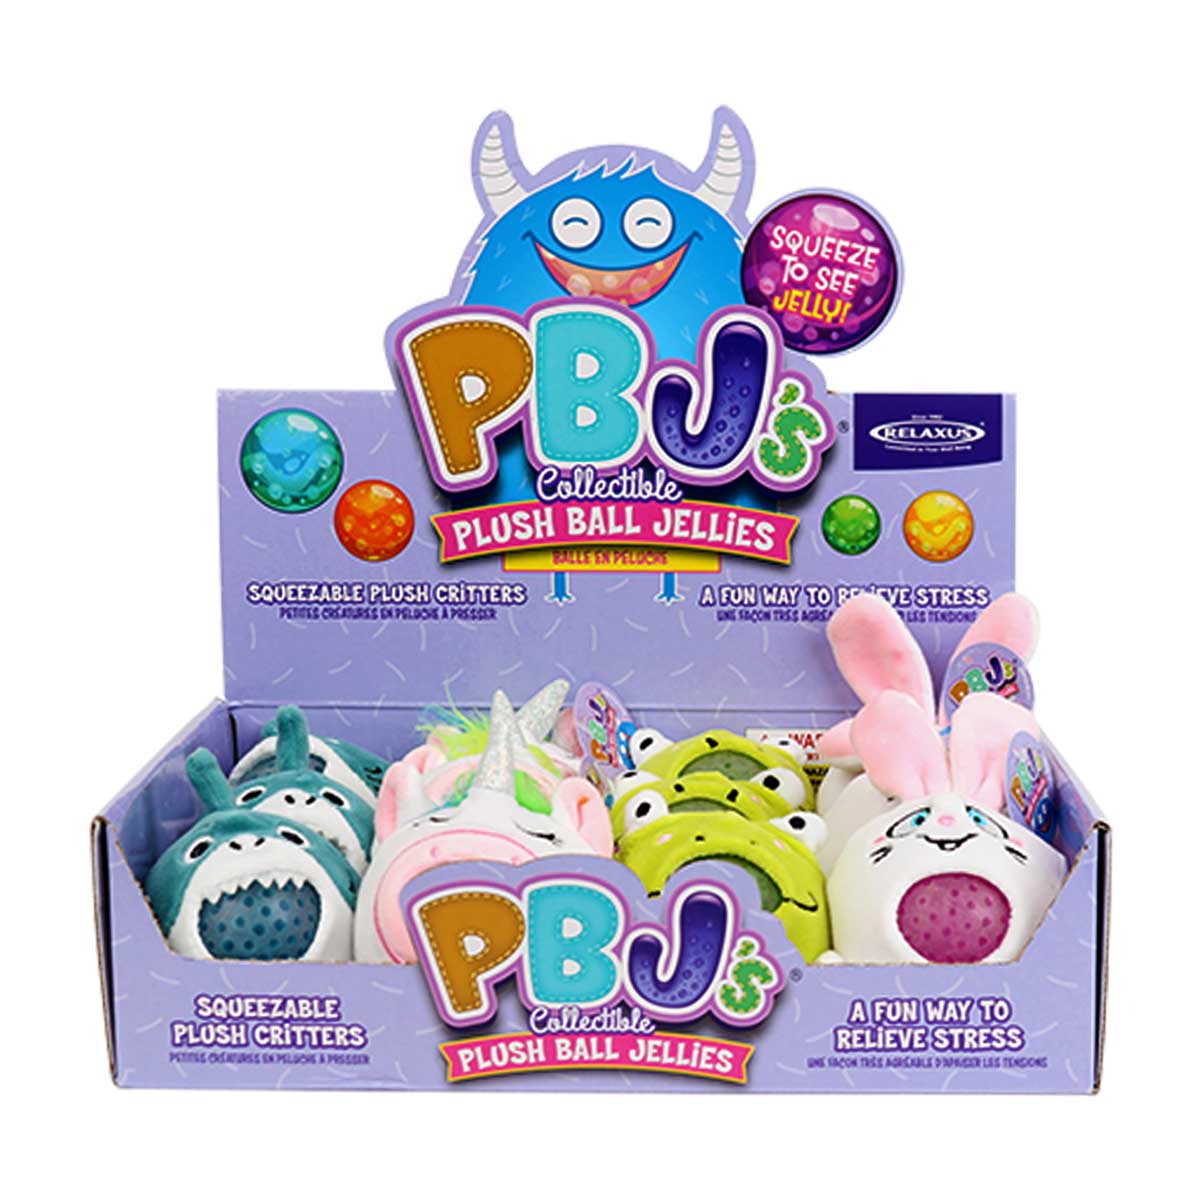 PBJ Collectible Plush Ball Jellies Displayer of 12